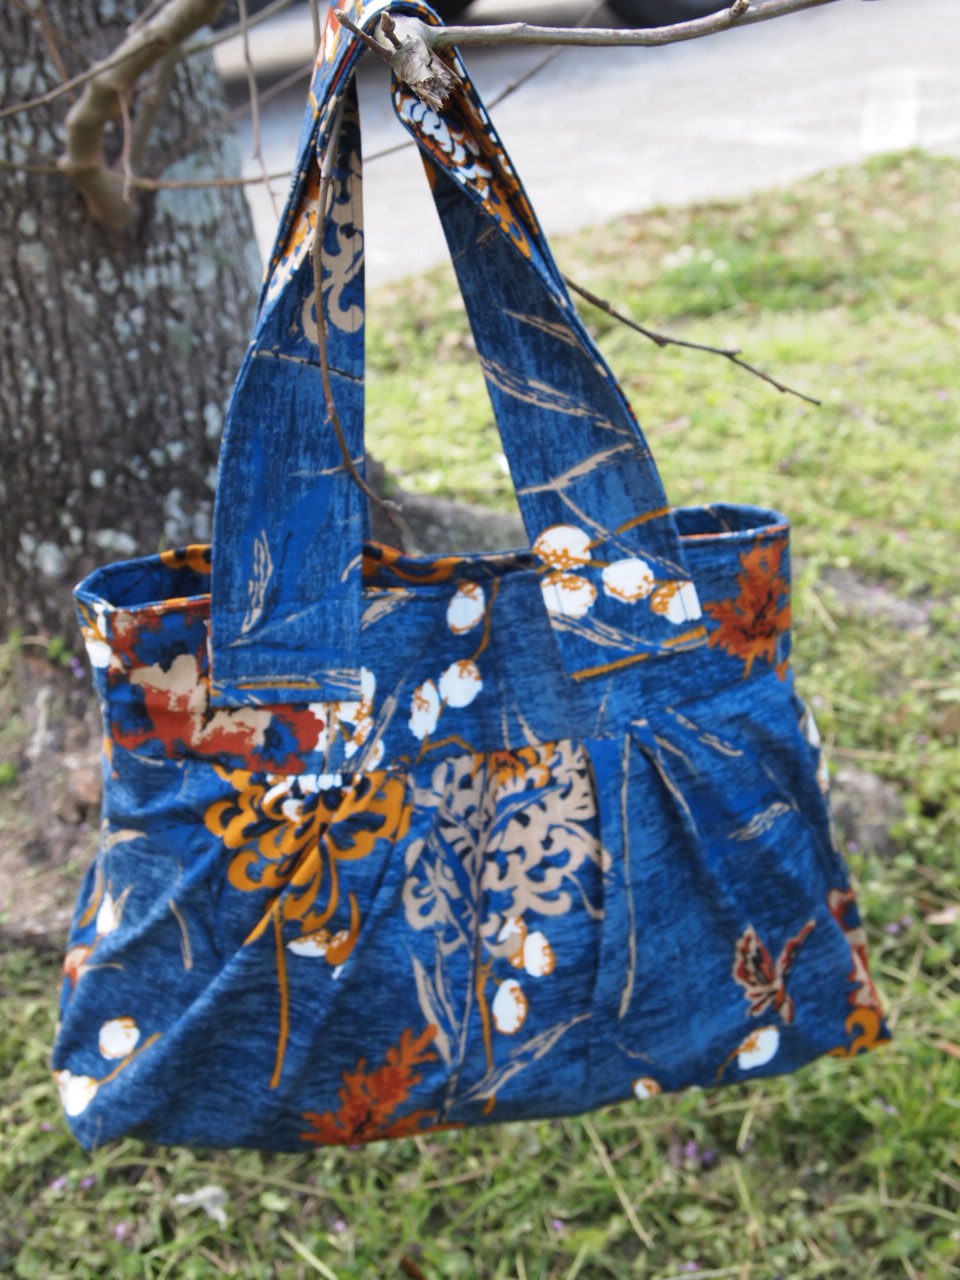 Tags: diy purse , free purse pattern